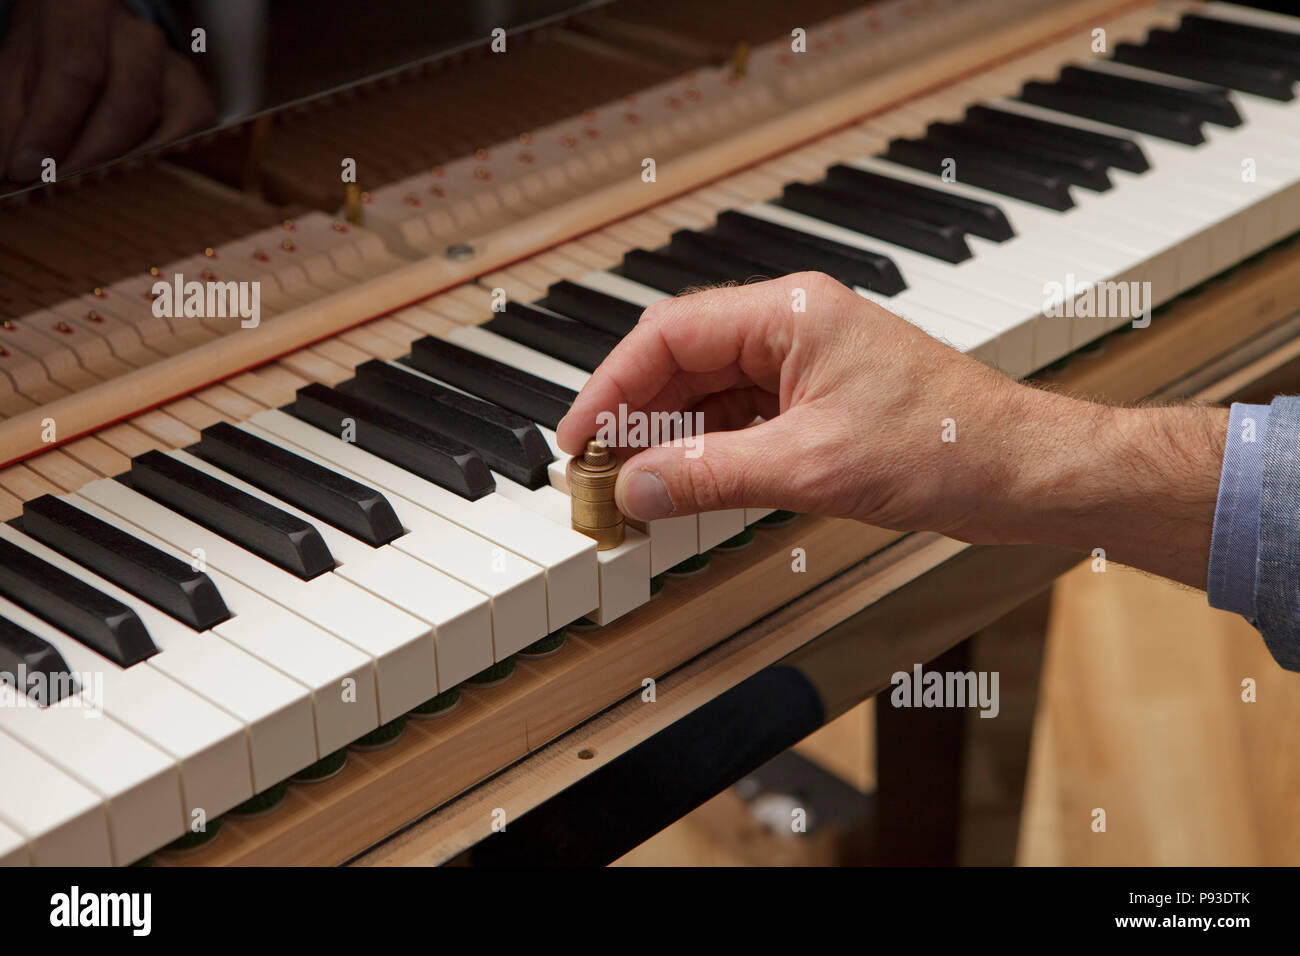 hand of a man tuning piano, close up Stock Photo